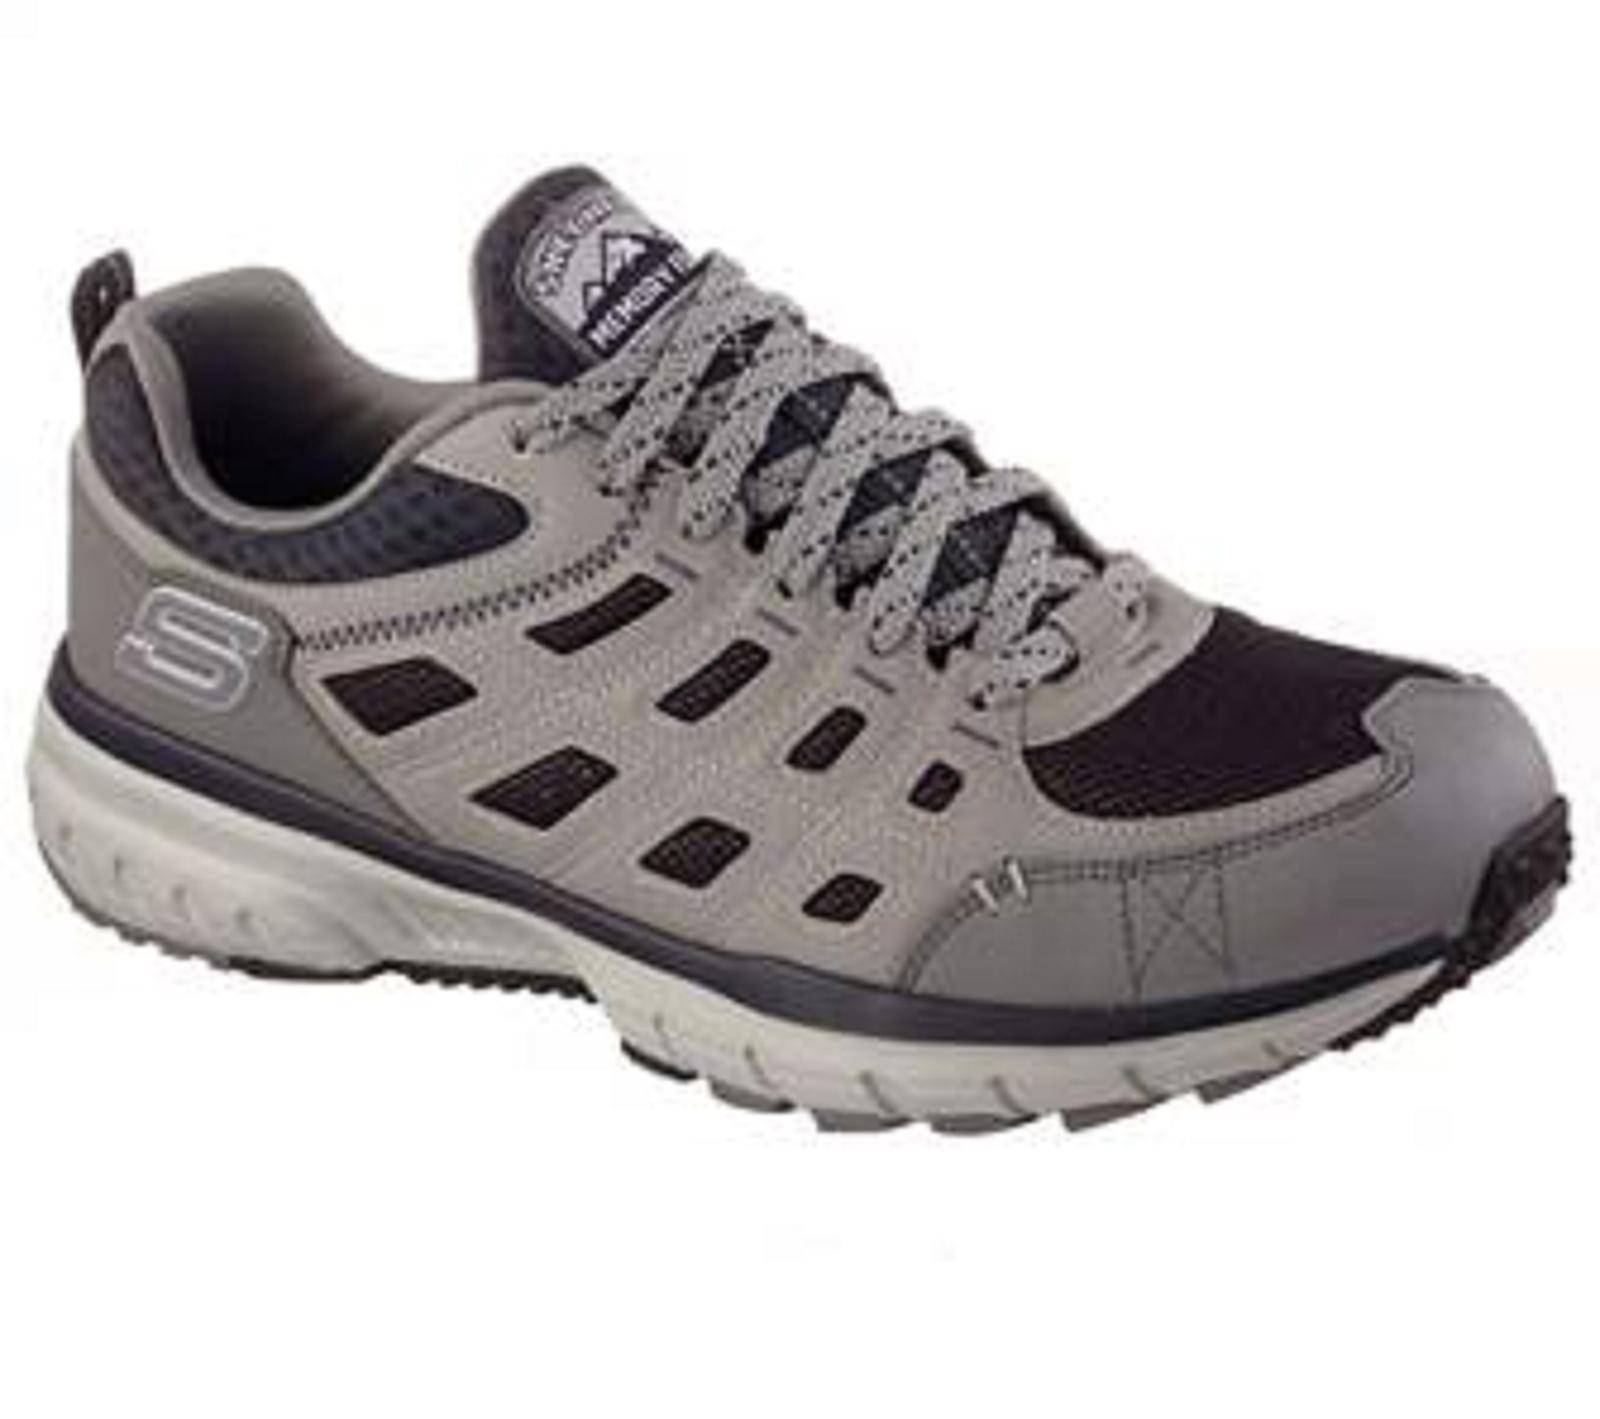 Skechers Men's Geo-Trek Gray/Black All-Terrain Running Shoe